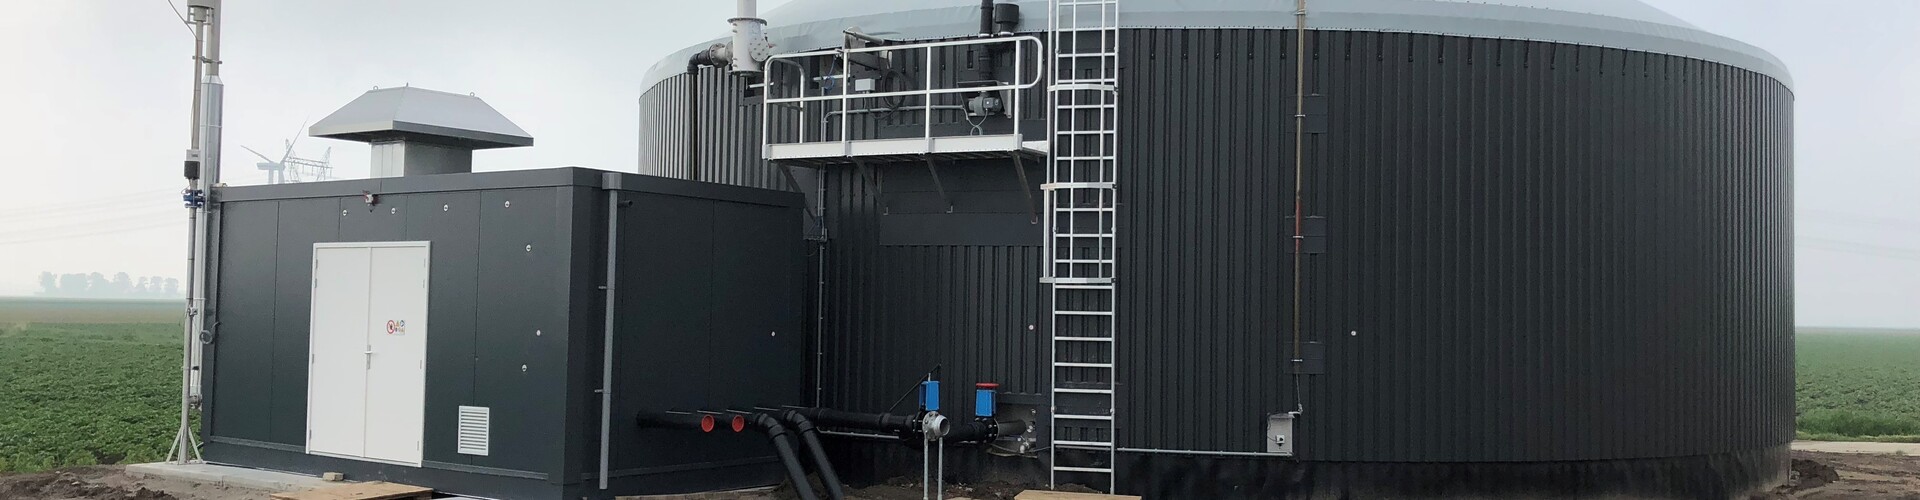 Biogas installation Dronten, the Netherlands